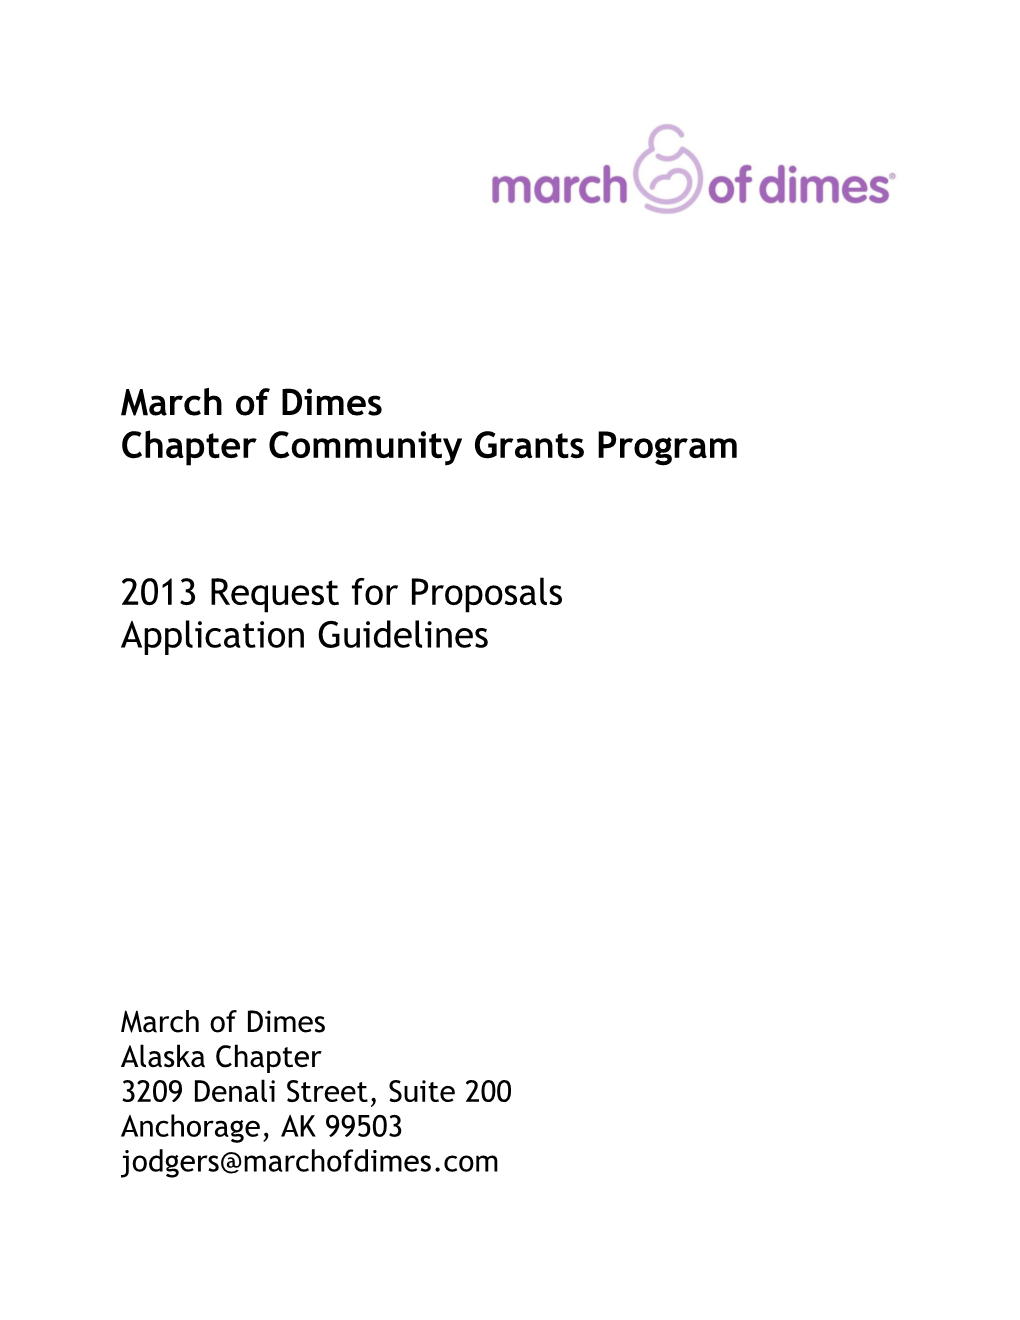 Chapter Community Grants Program